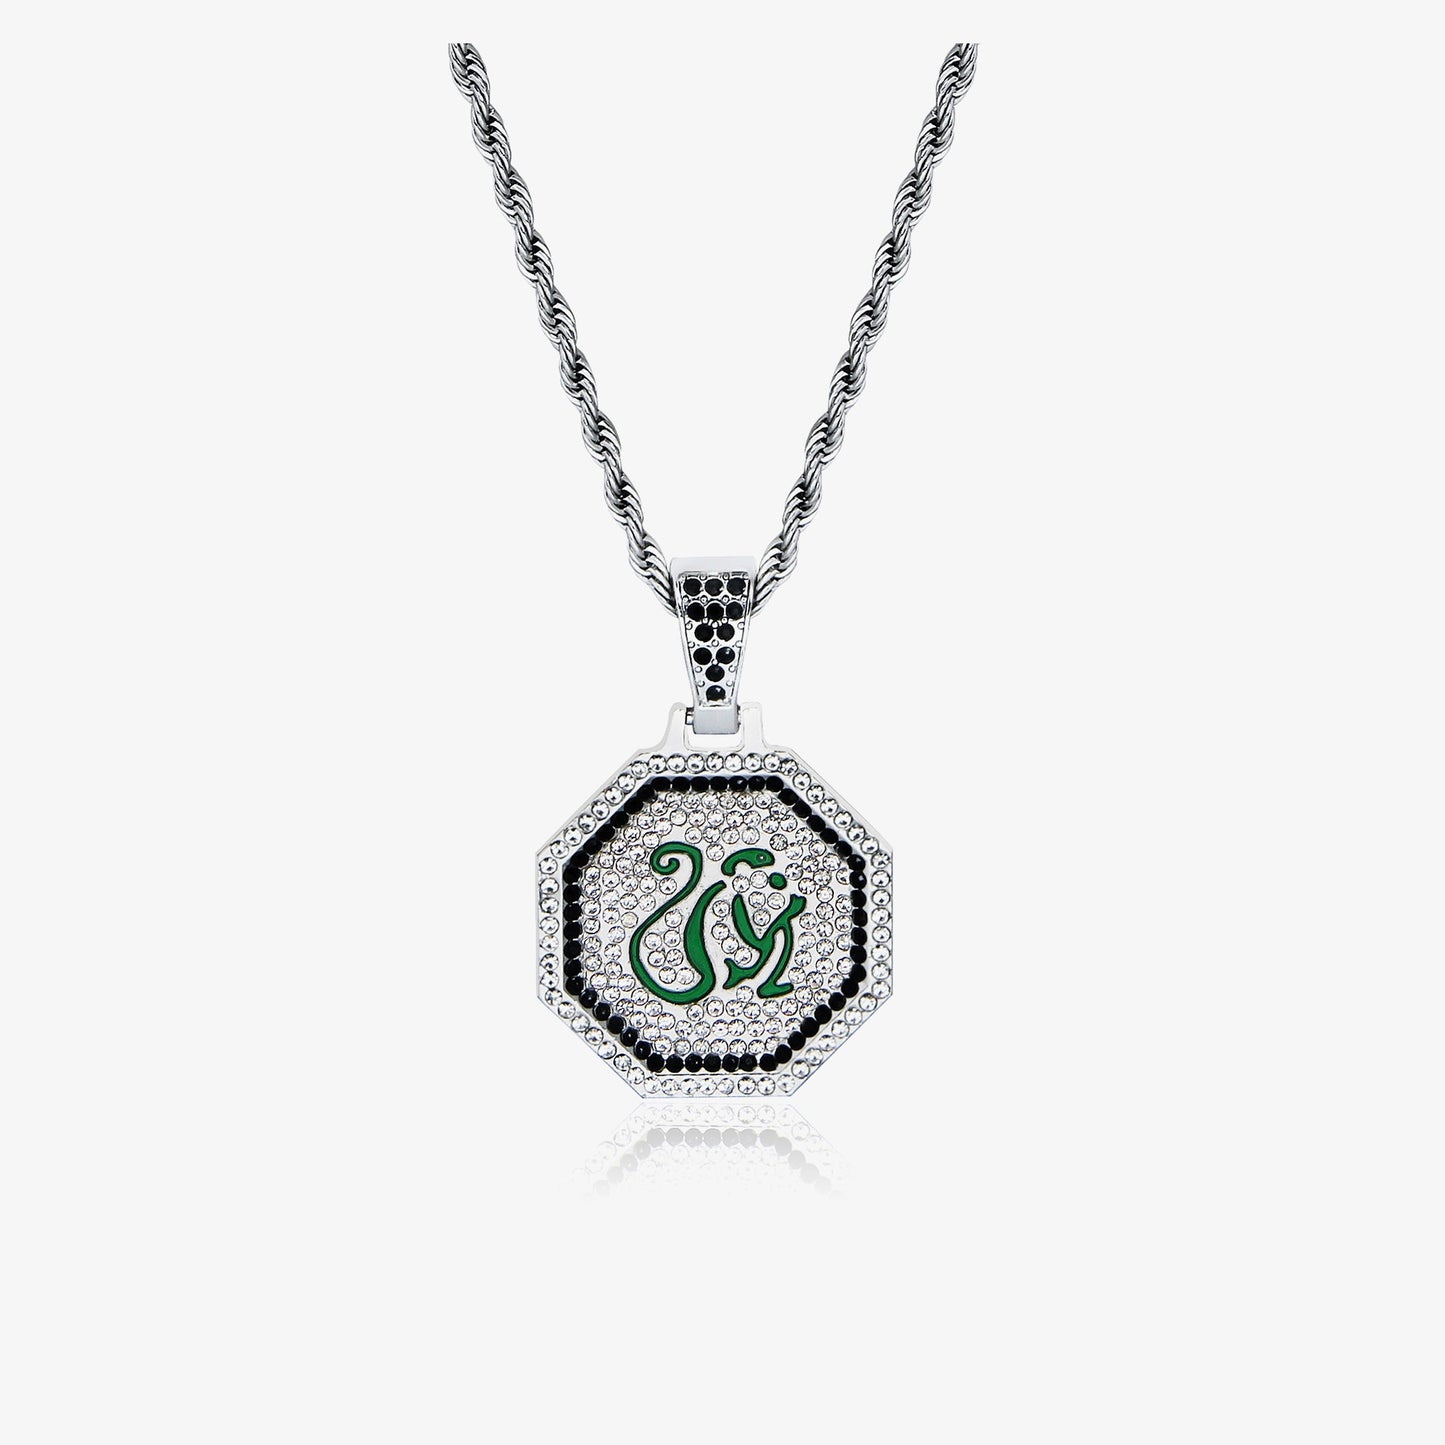 Twelve Zodiac Zodiac Men Fashionable Necklaces - NextthinkShop0CJLX174931106FU0